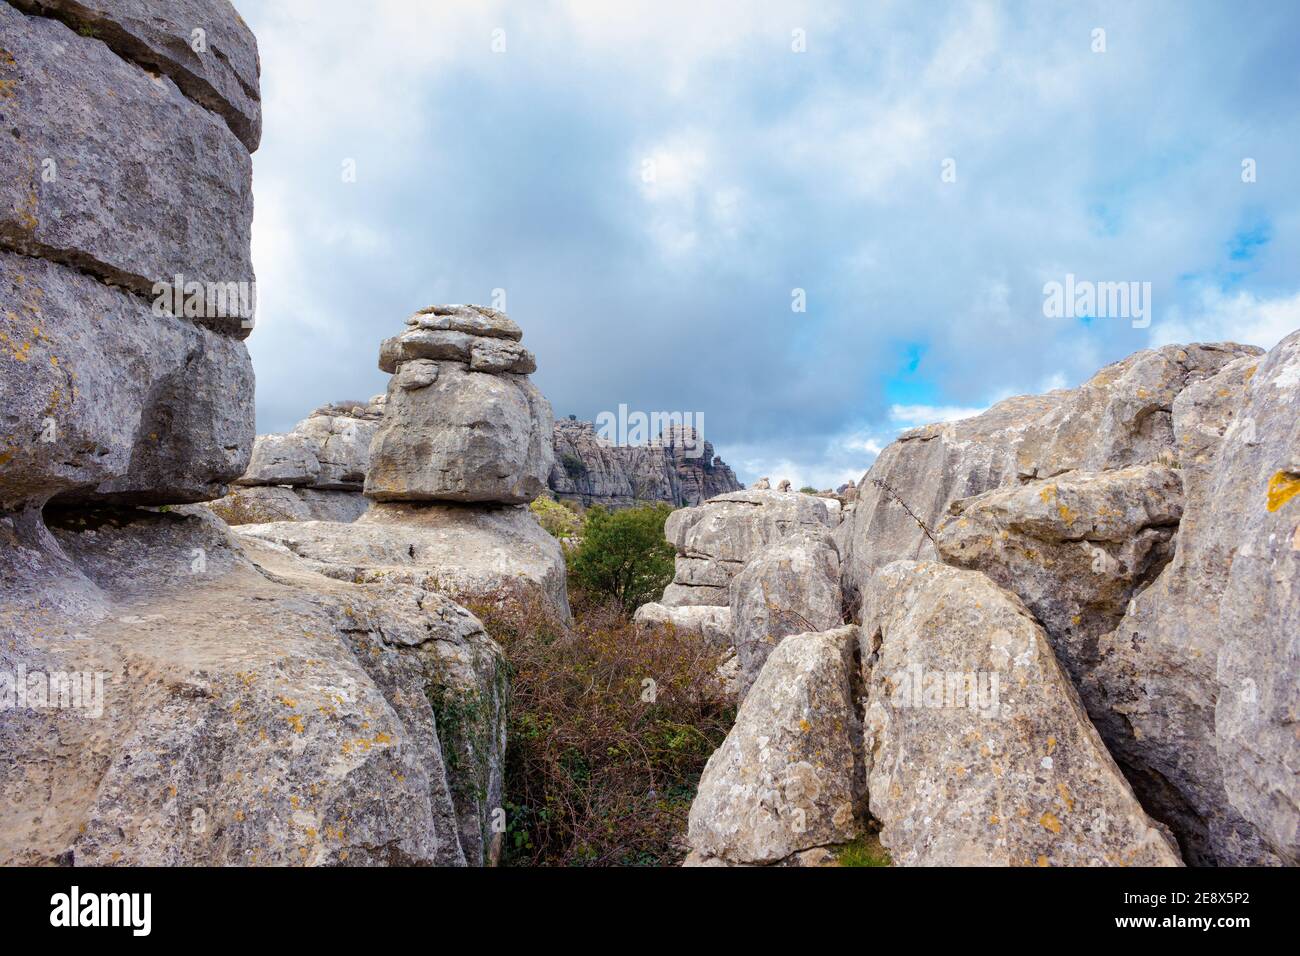 Vista de las impresionantes rocas de piedra caliza del Torcal de Antequera, Andalucía, España Foto de stock